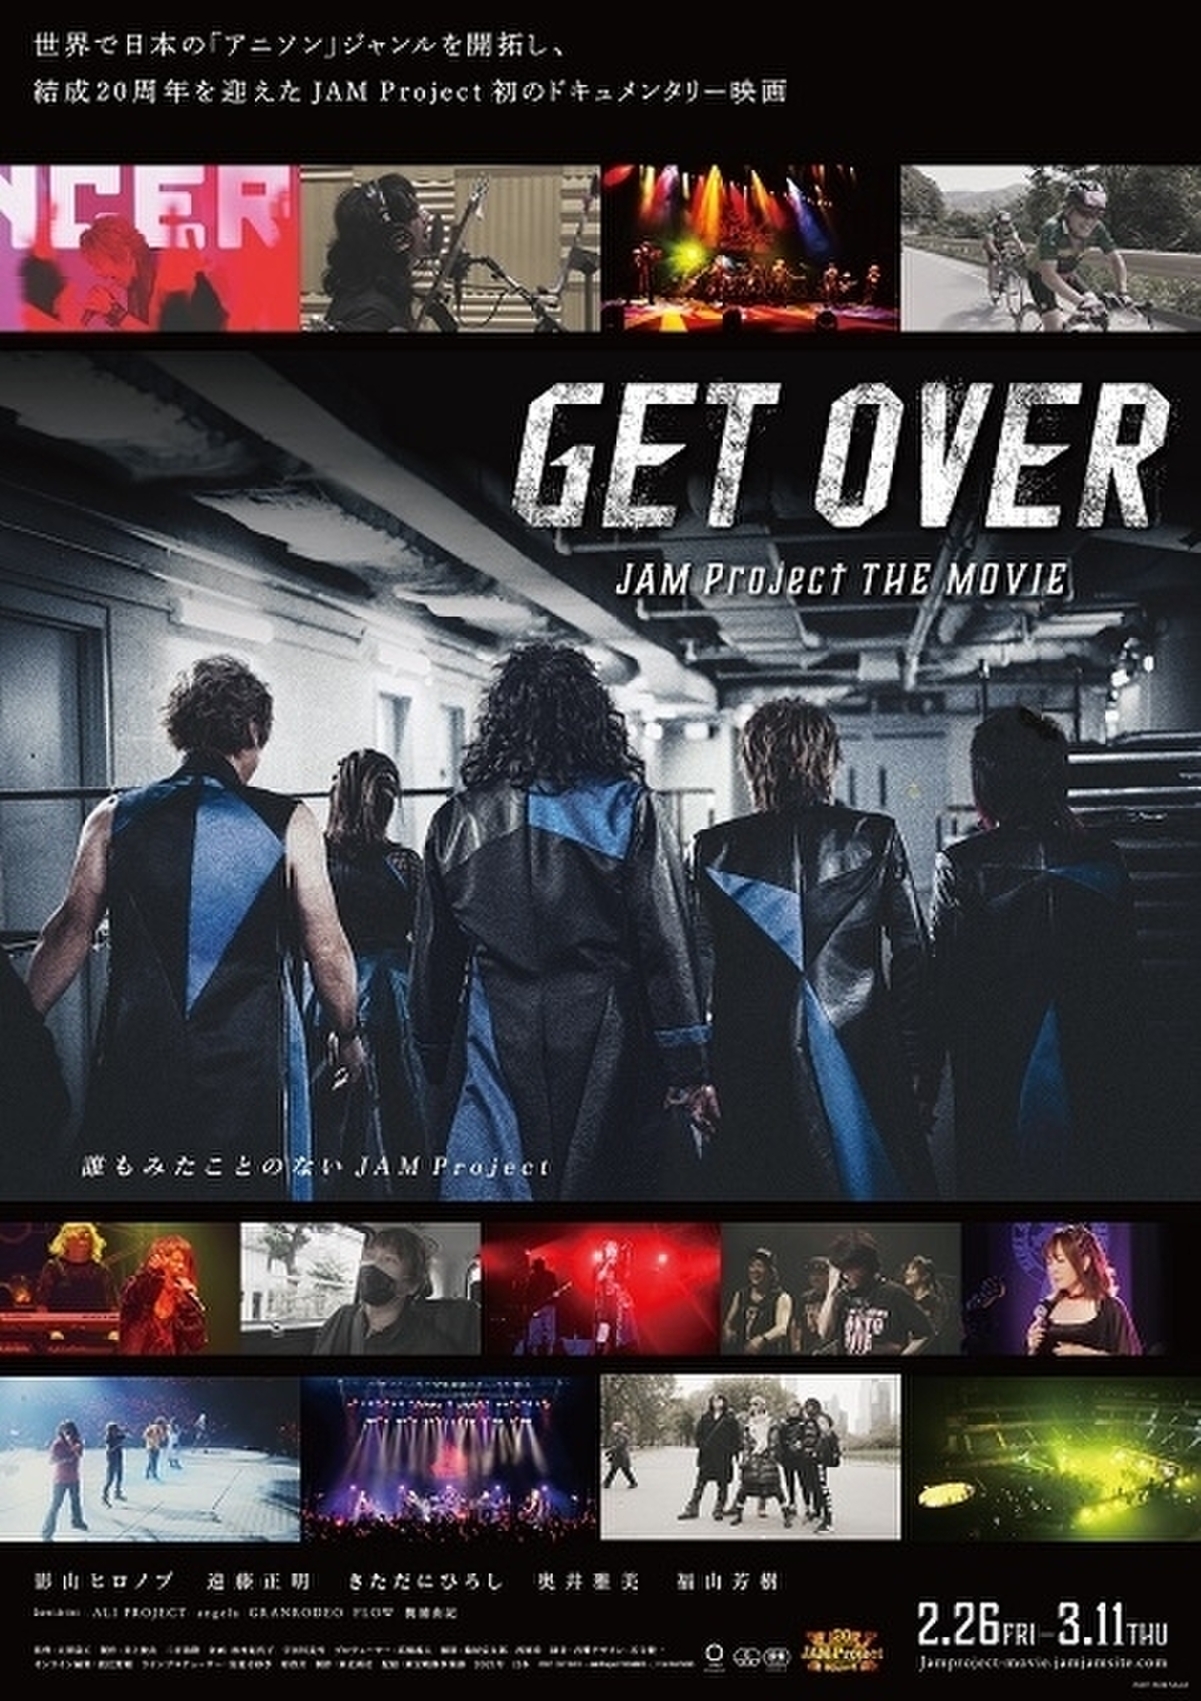 Jam Project 初のドキュメンタリー映画 Get Over 2月26日から2週間限定公開 映画ニュース 映画 Com